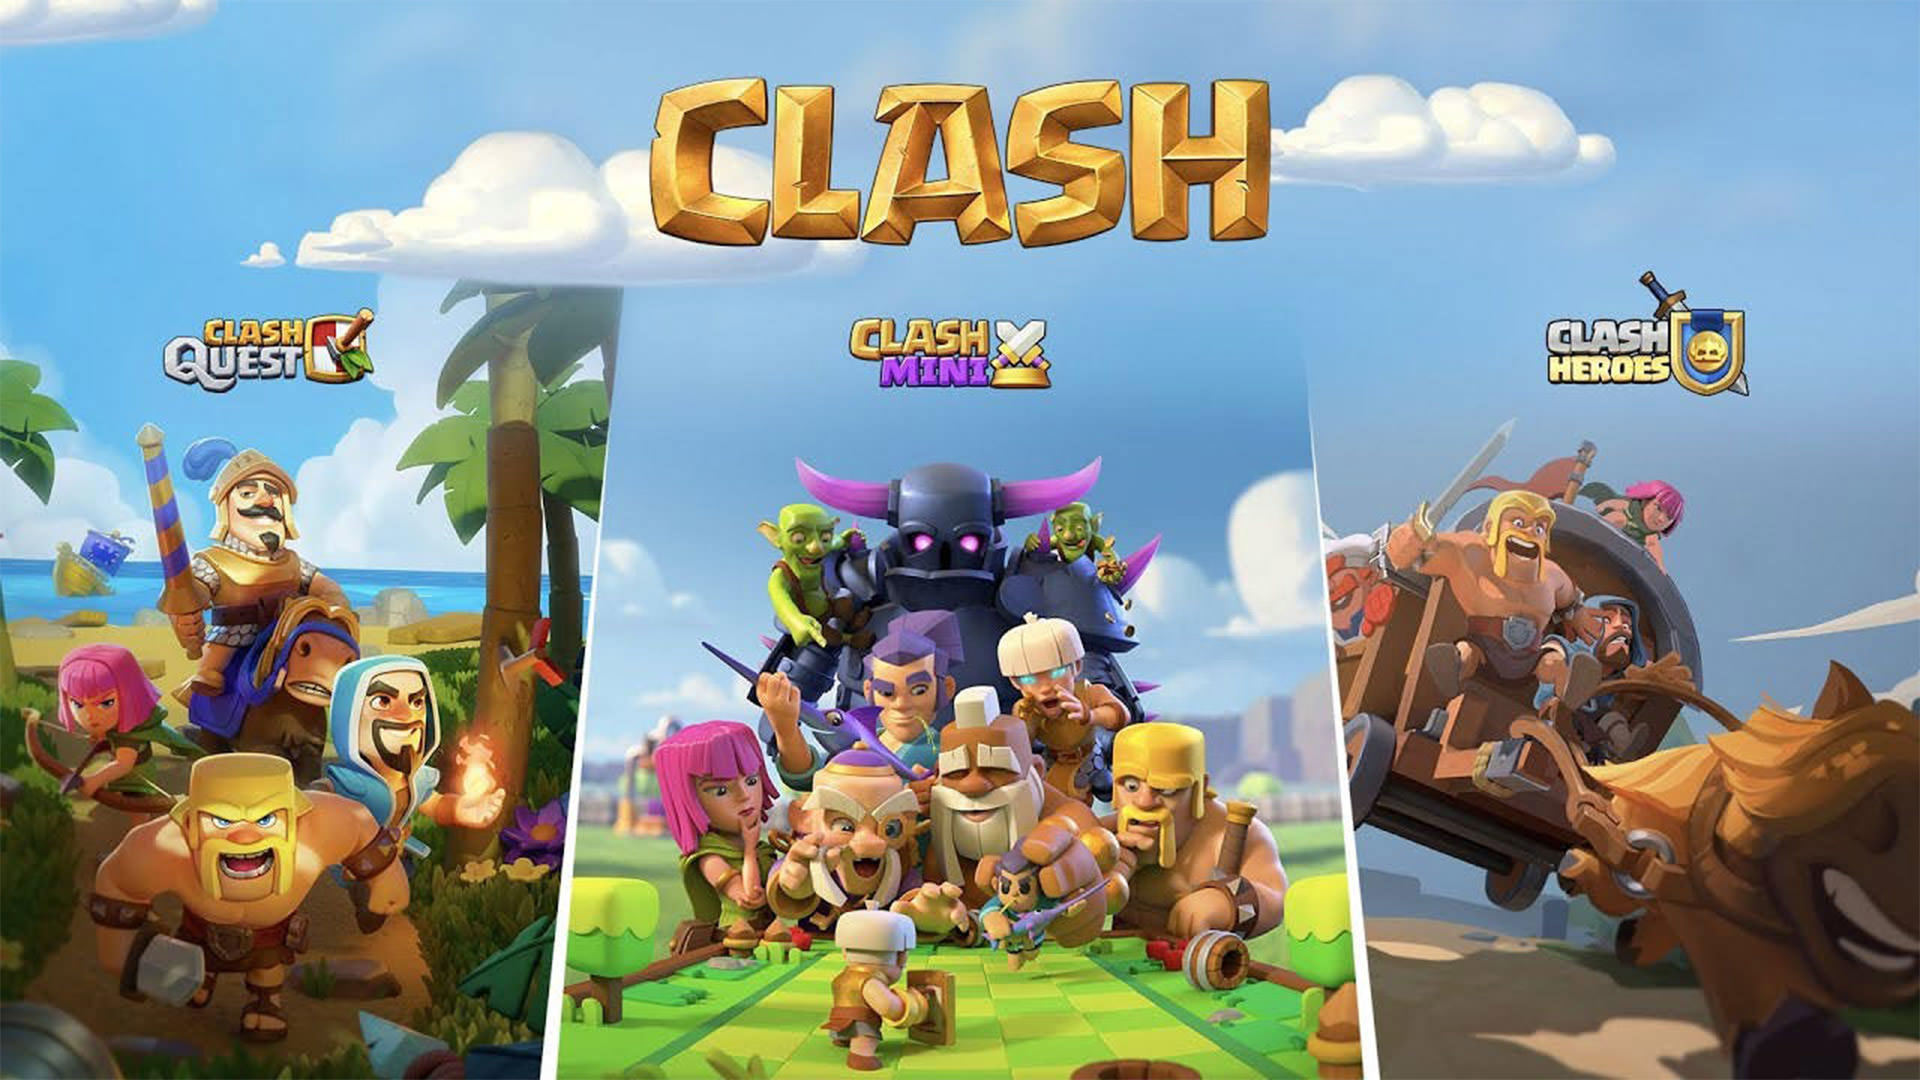 Clash новая игра. Clash Quest новая игра. Новая игра от суперселл Clash Mini. Клеш мини новая игра. Clash Mini последняя версия.